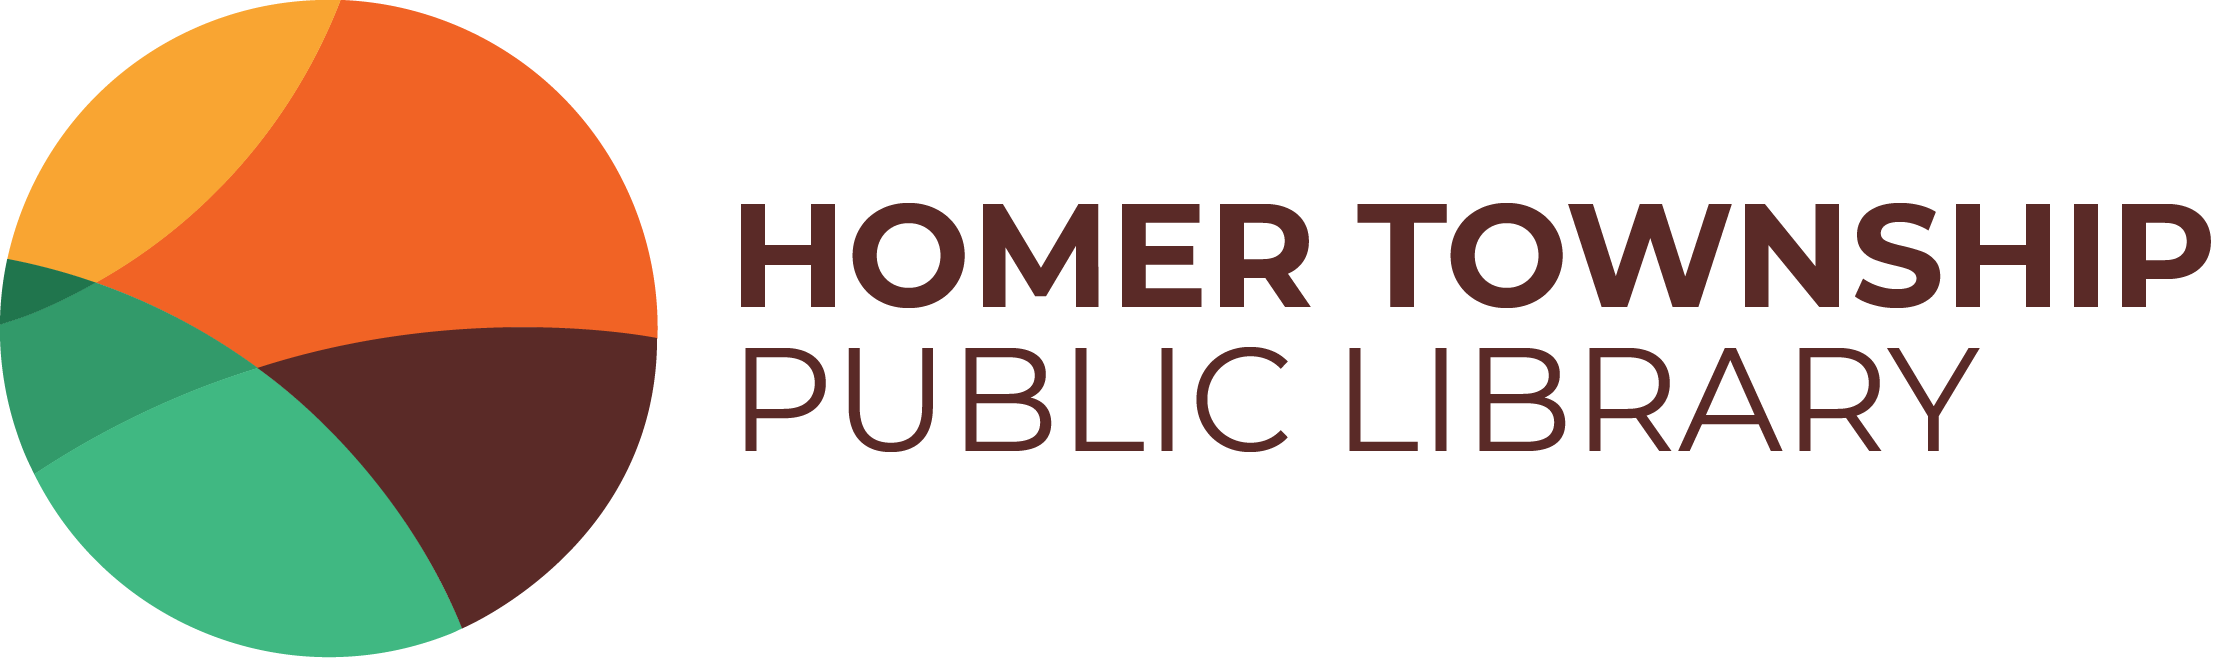 Homer Township Public Library horizontal logo